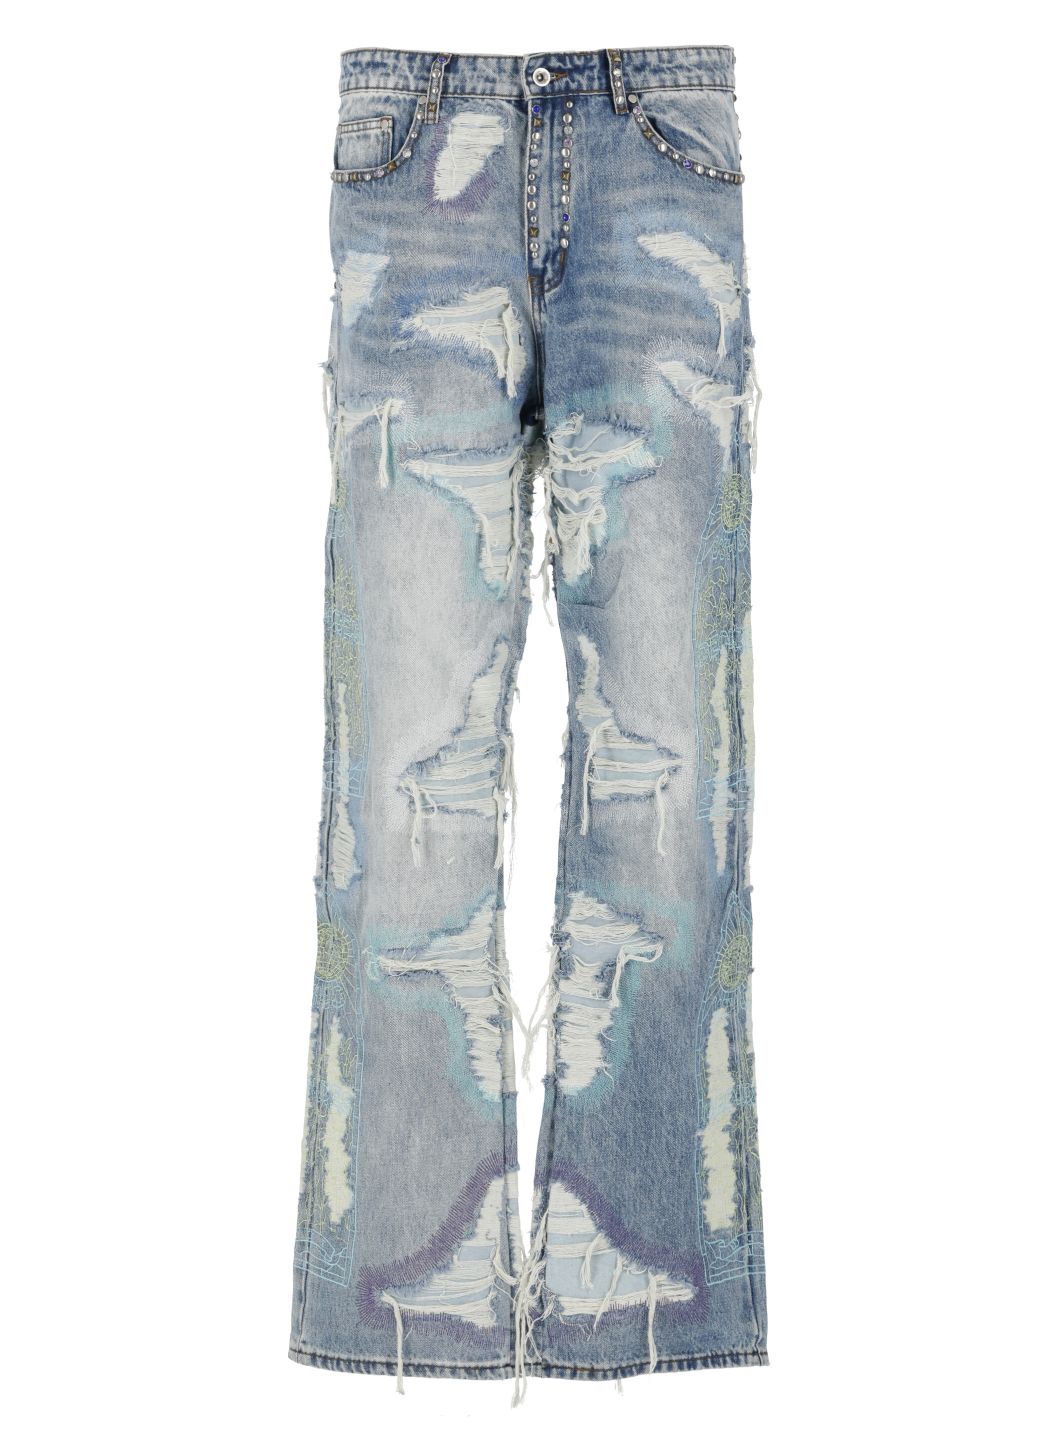 Multicolor Stud Distressed jeans